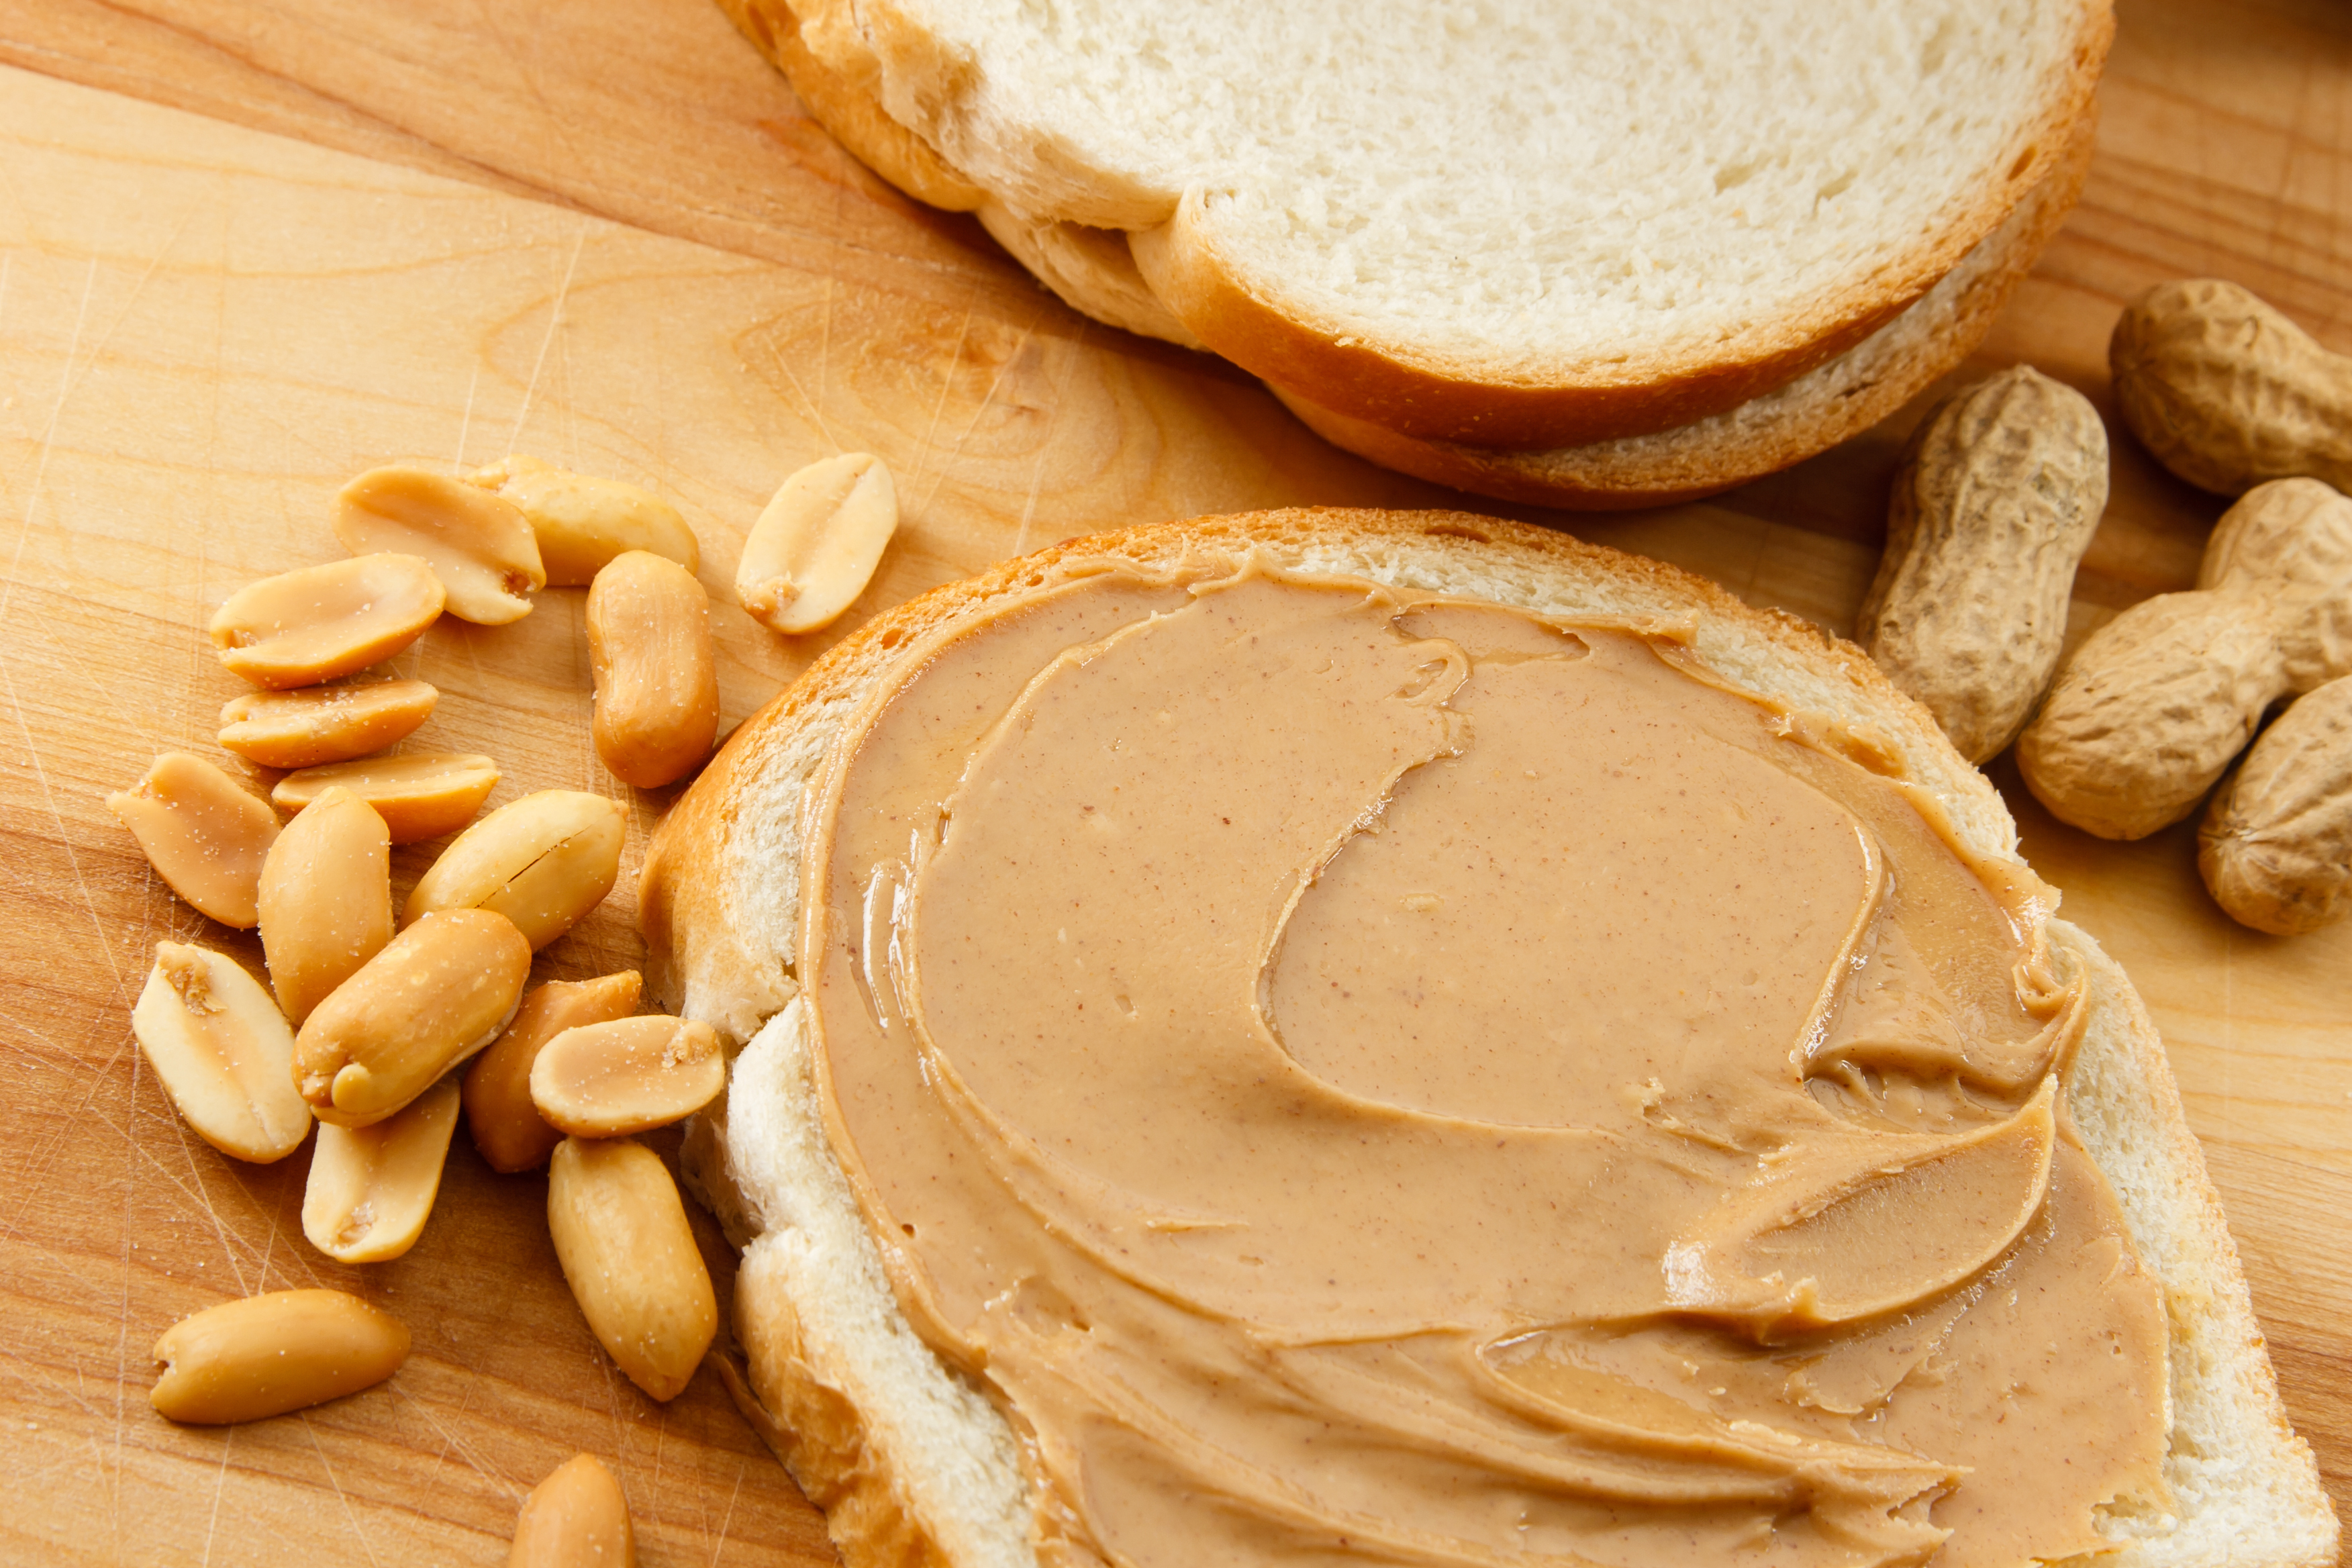 bigstock-peanut-butter-on-bread-with-pe-13614866.jpg